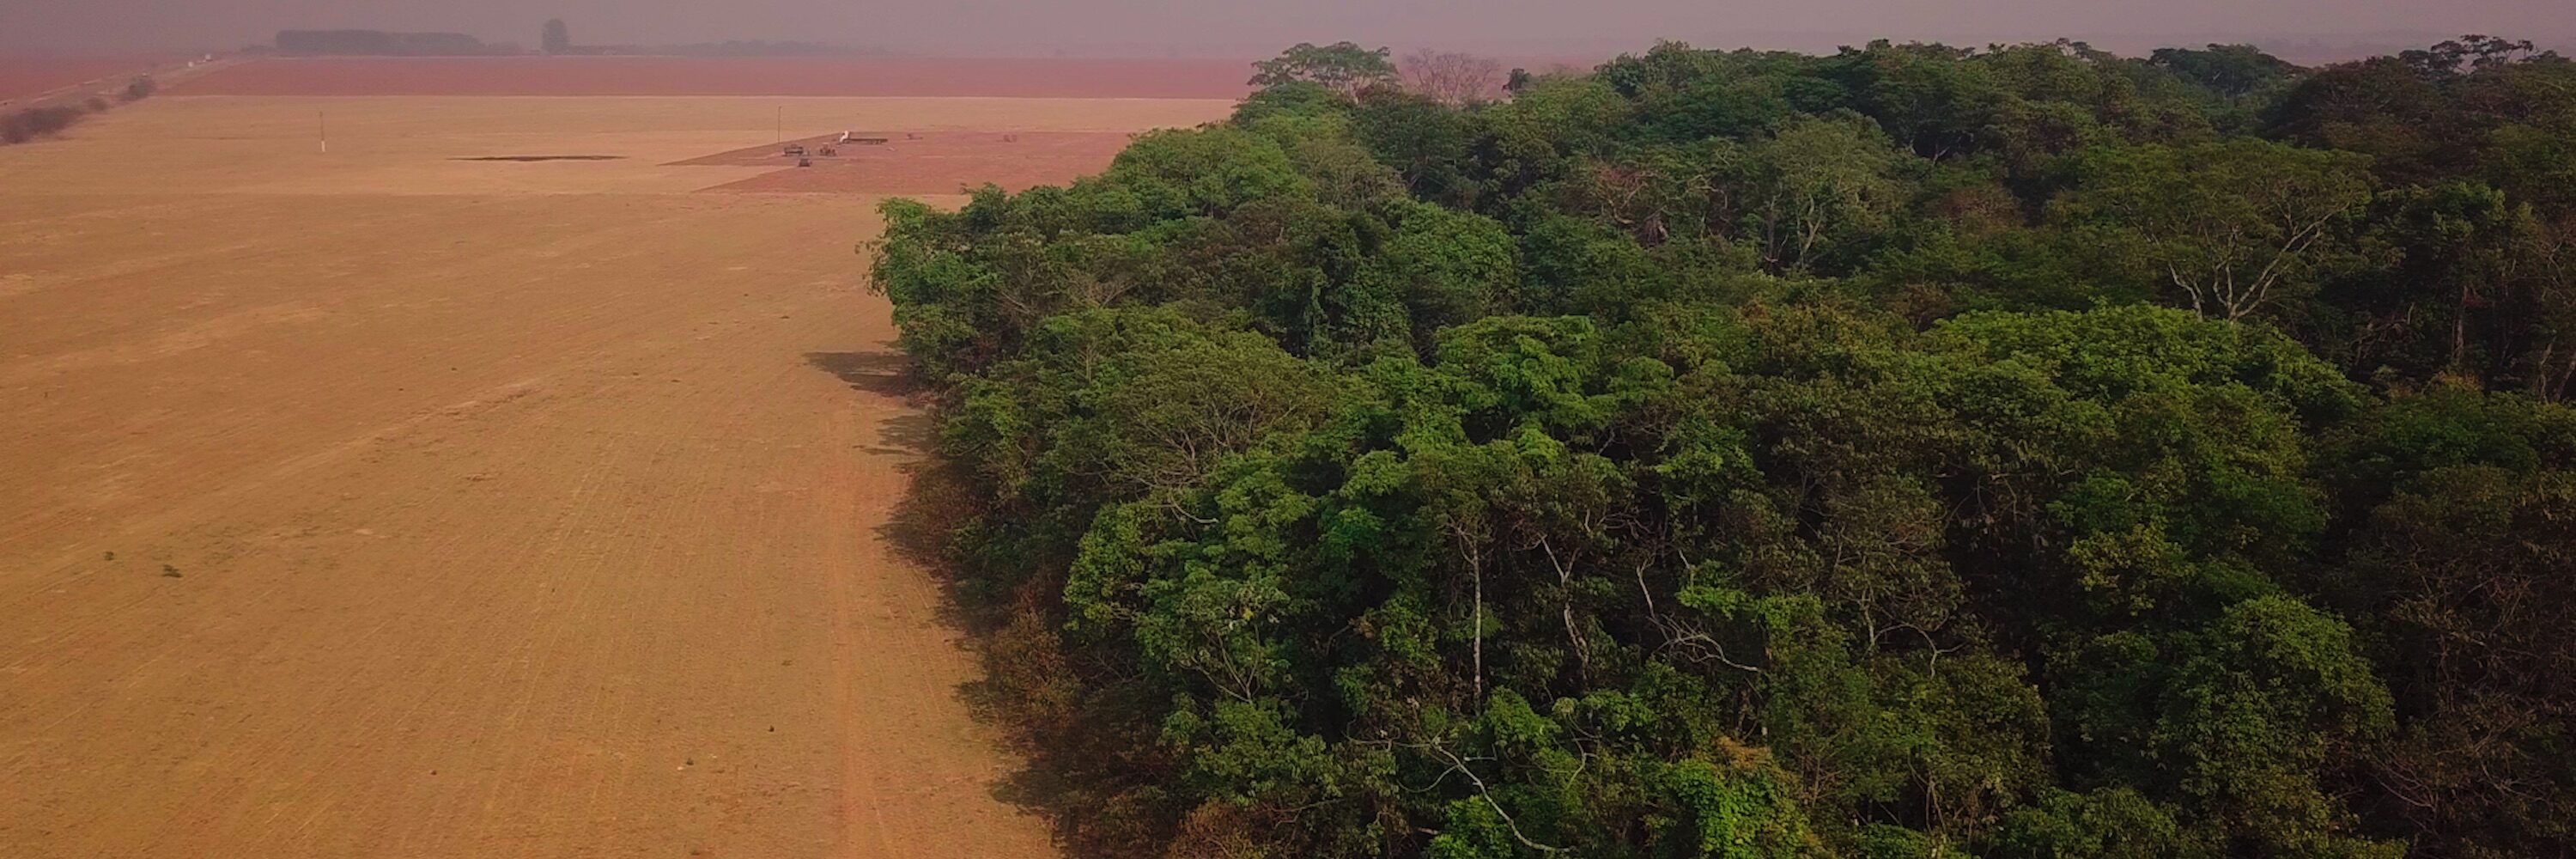 Pantanal desmatado, 2020